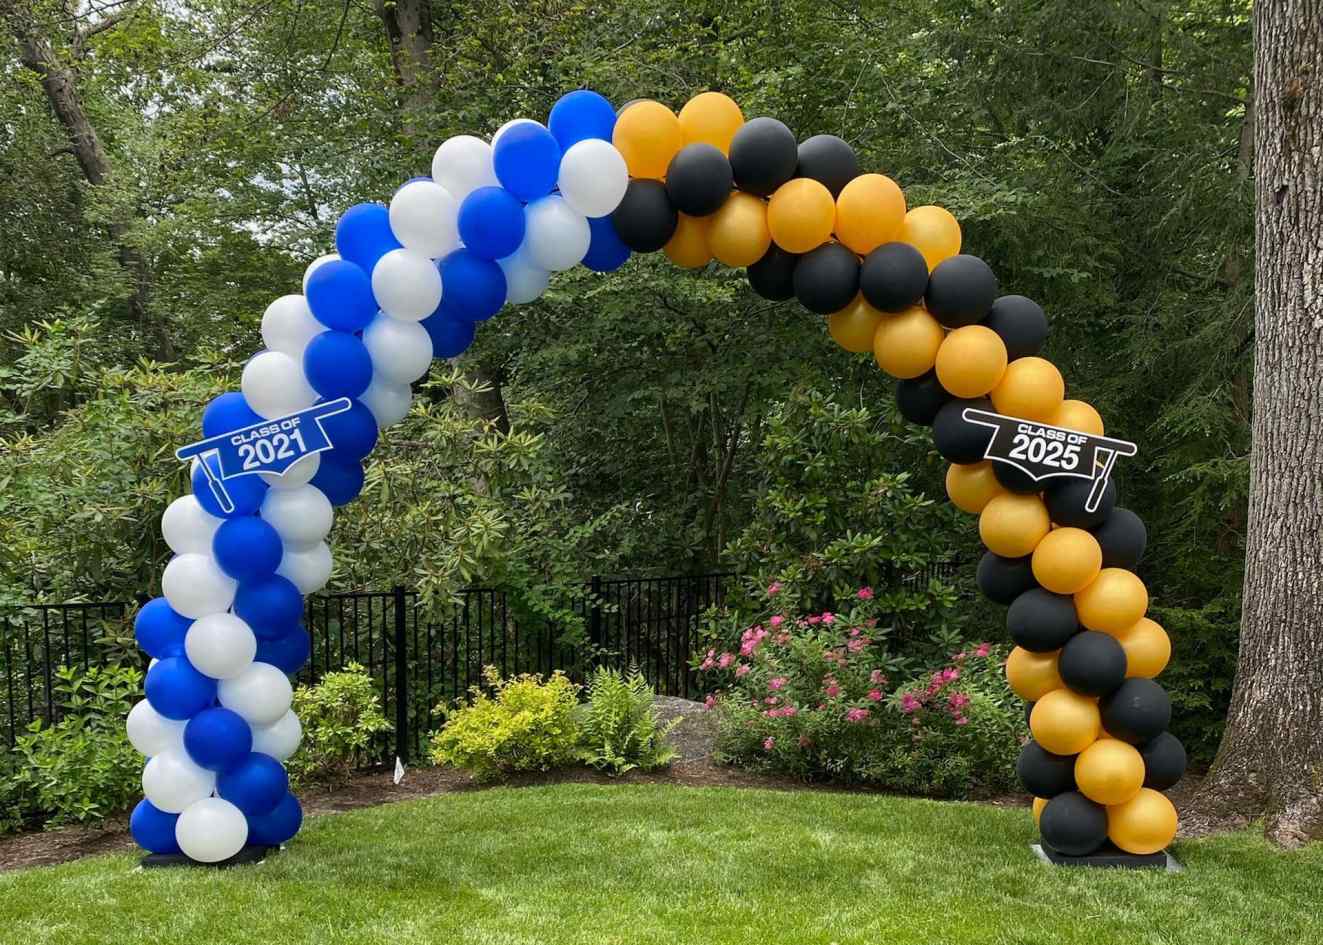 Bounce house balloon decoration, Tips, Outdoor installation